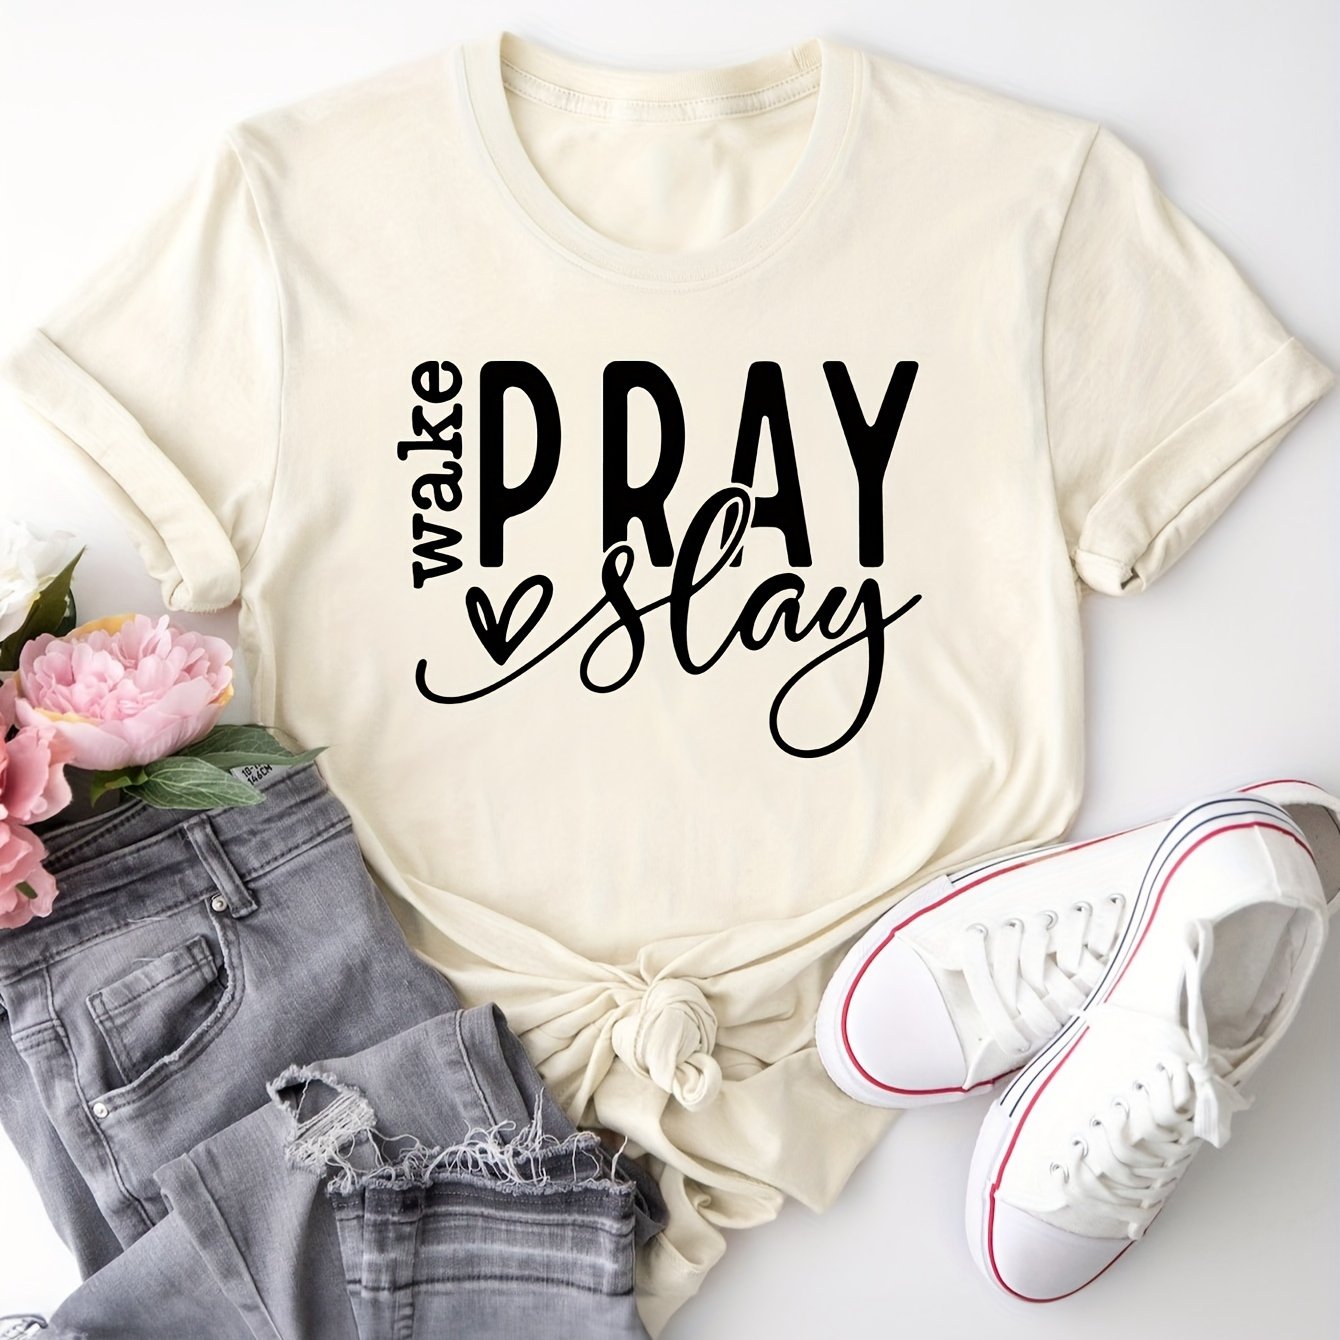 Wake Pray Slay Women's Christian T-shirt claimedbygoddesigns